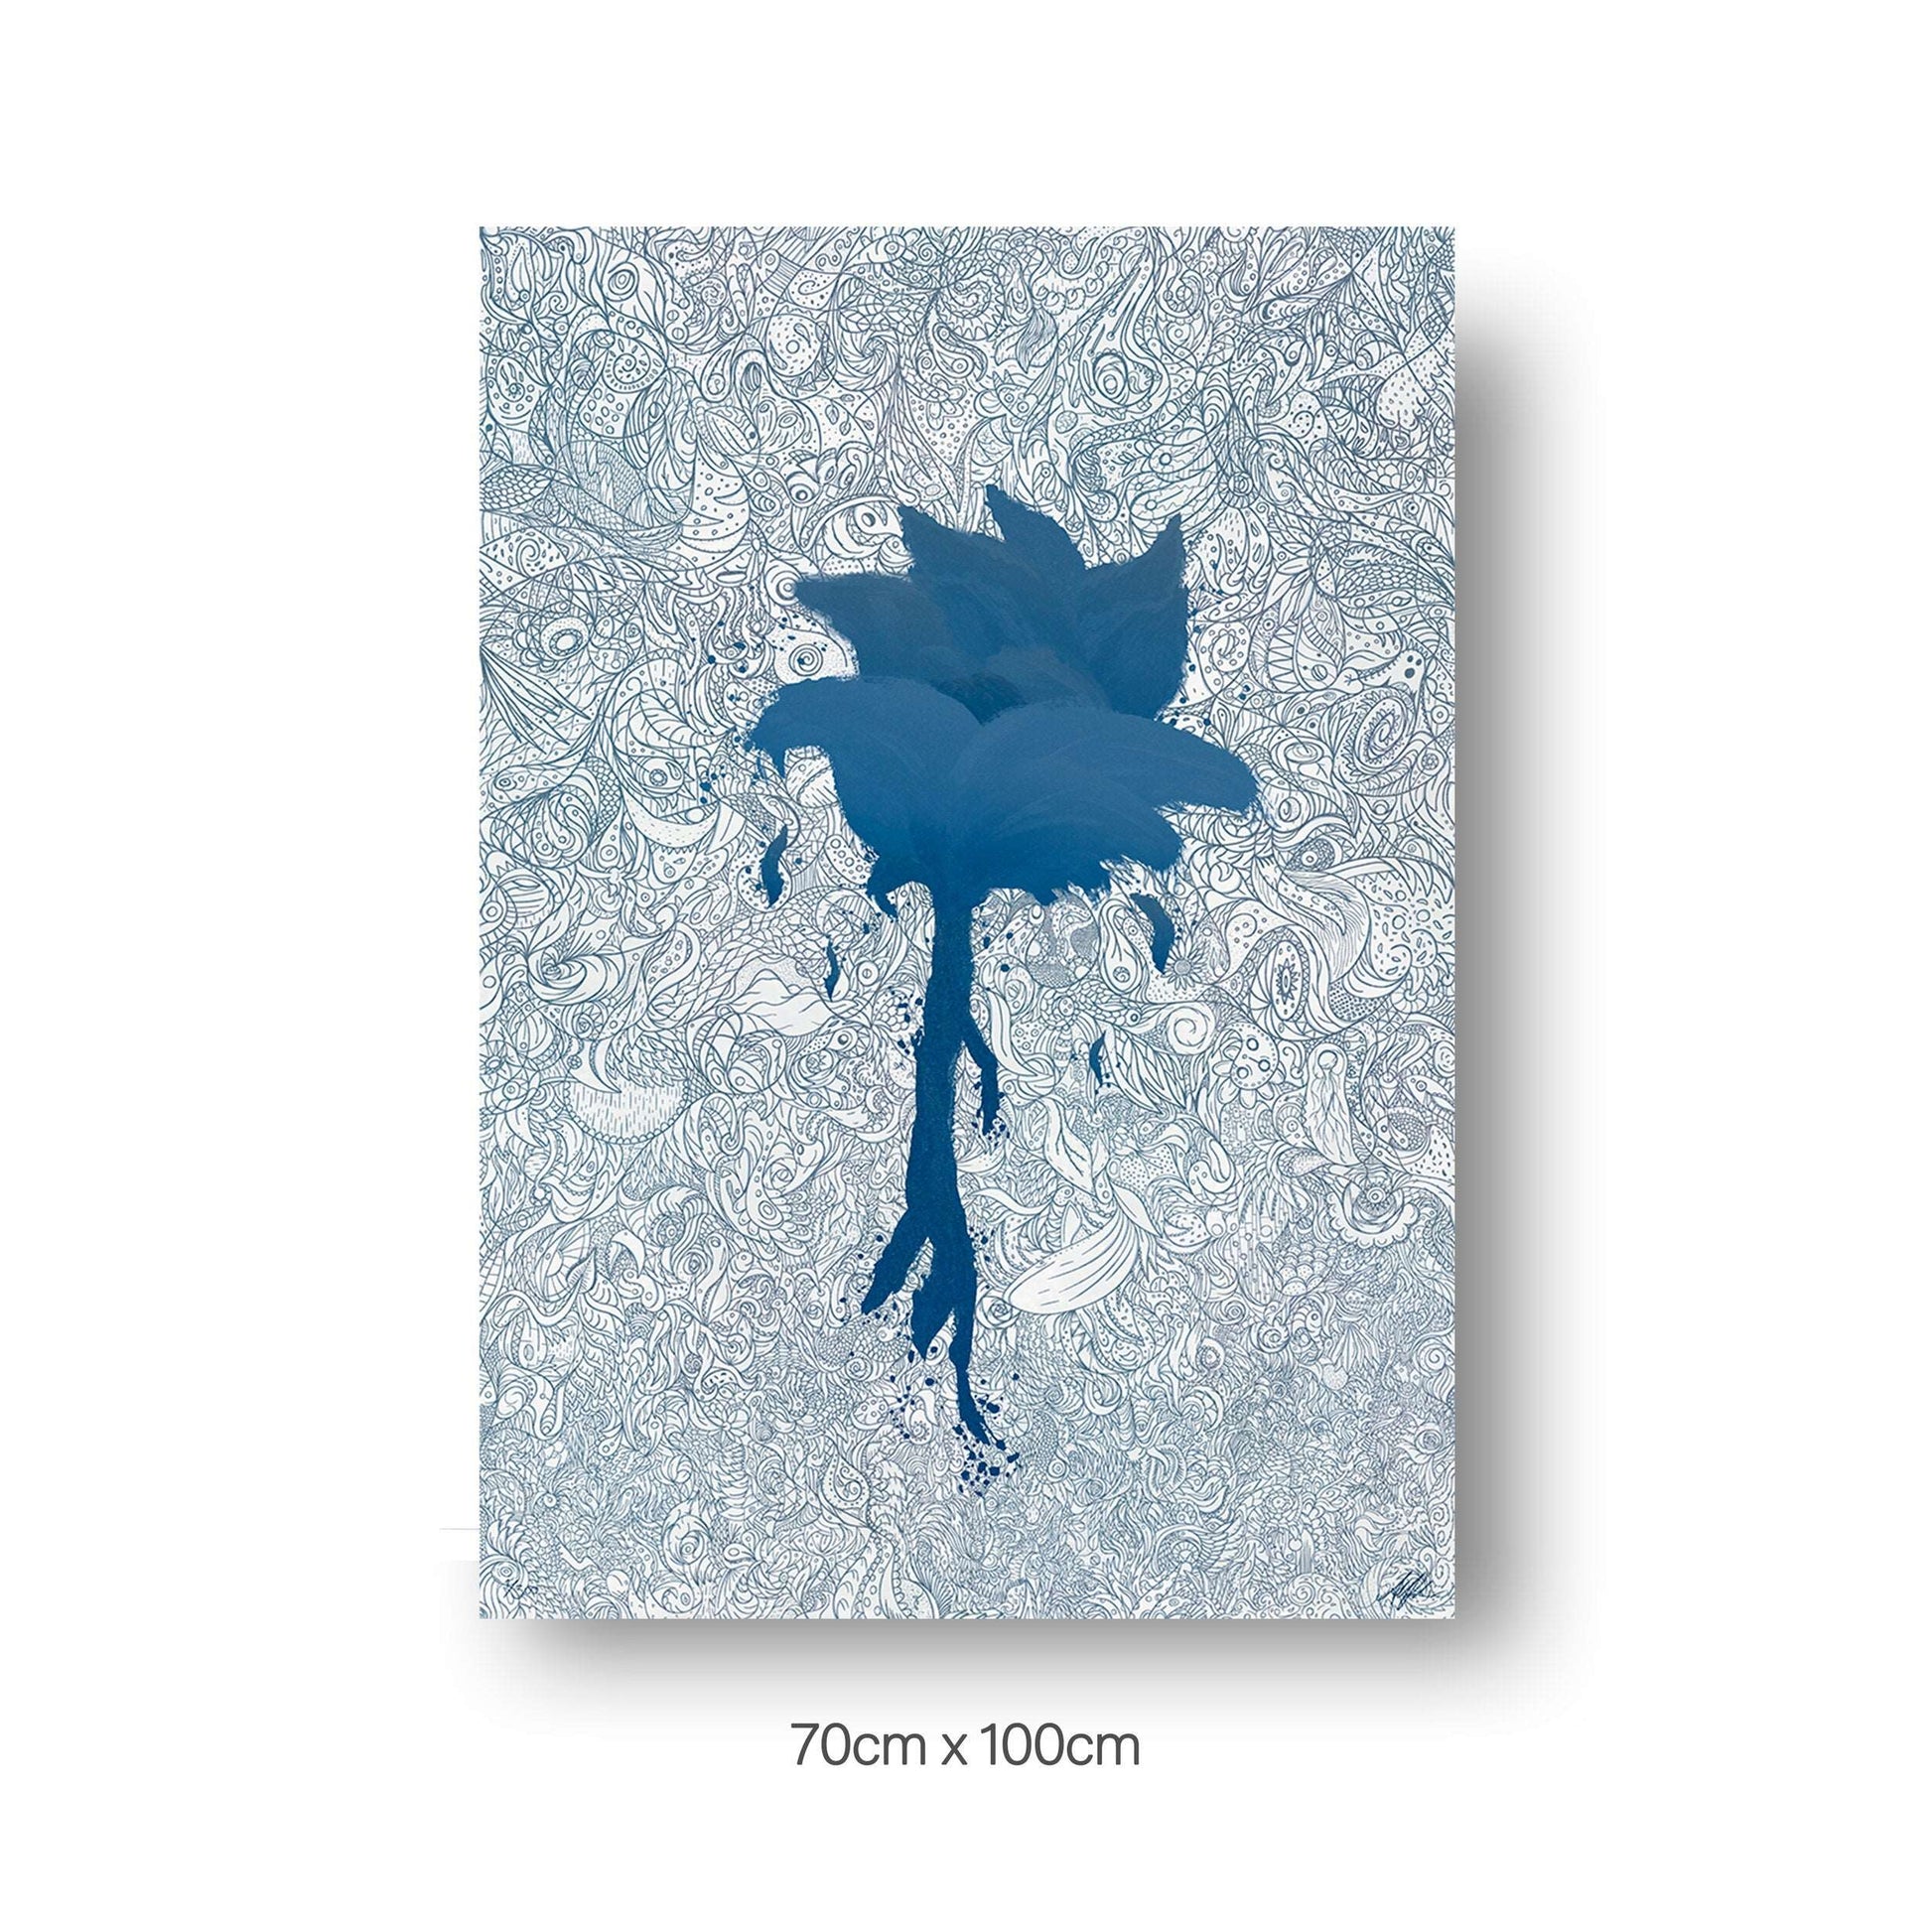 NOKUKO - Art - Alan Pedersen - ALANTHEROCK - Trust - Listen to me, myself - Limited edition - Noble blue - 70cmx100cm print